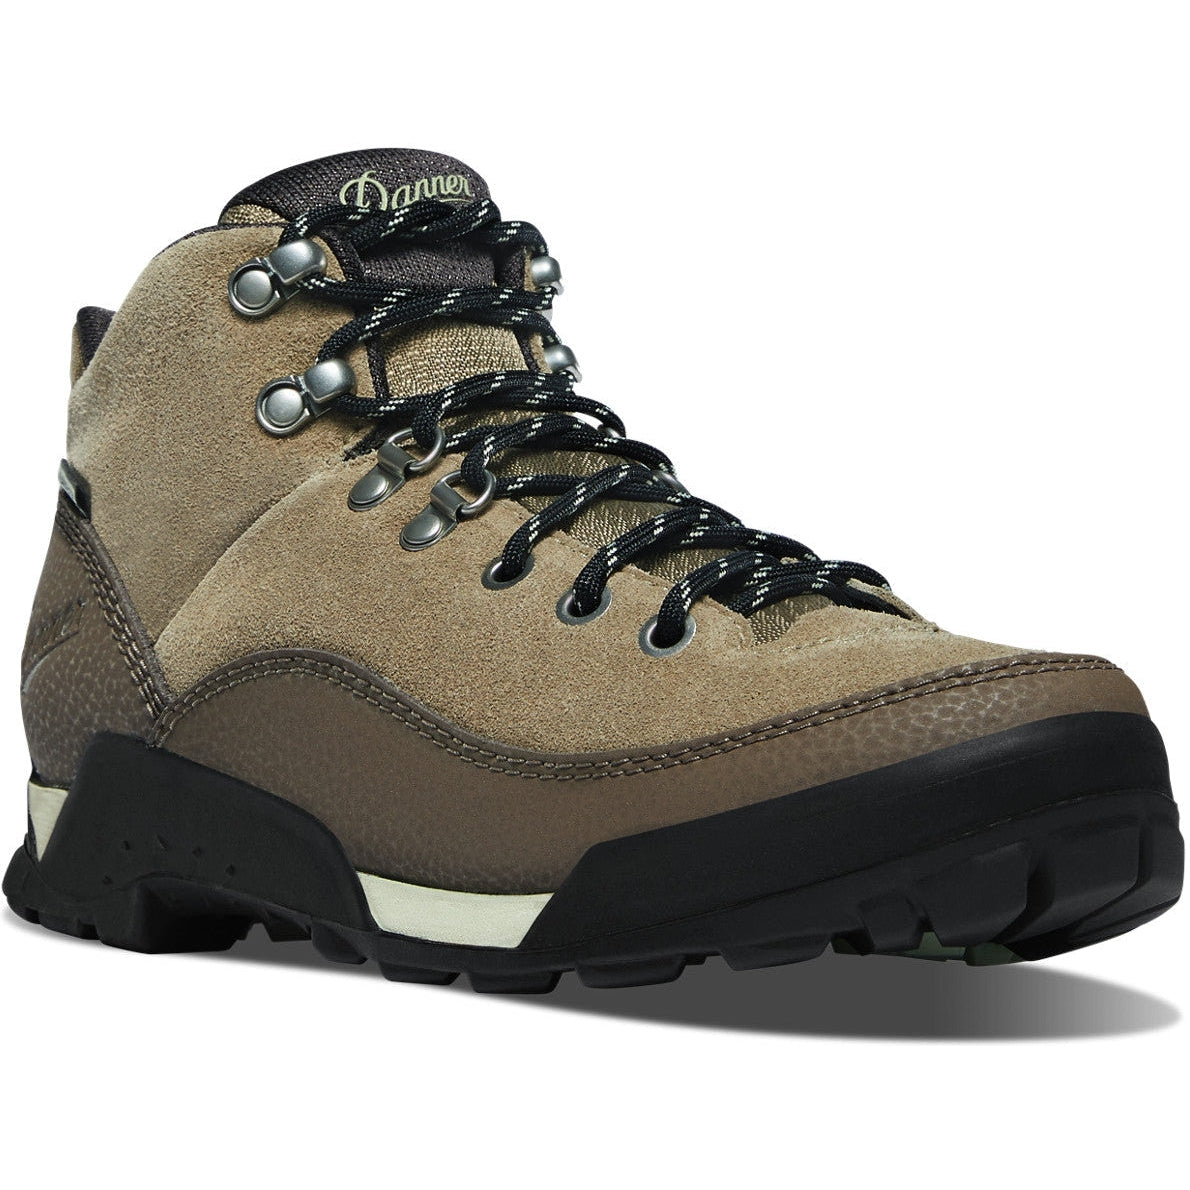 Danner Women's Panorama Mid 6" Waterproof Hiking Boot - Gray - 63437 5 / Medium / Gray - Overlook Boots